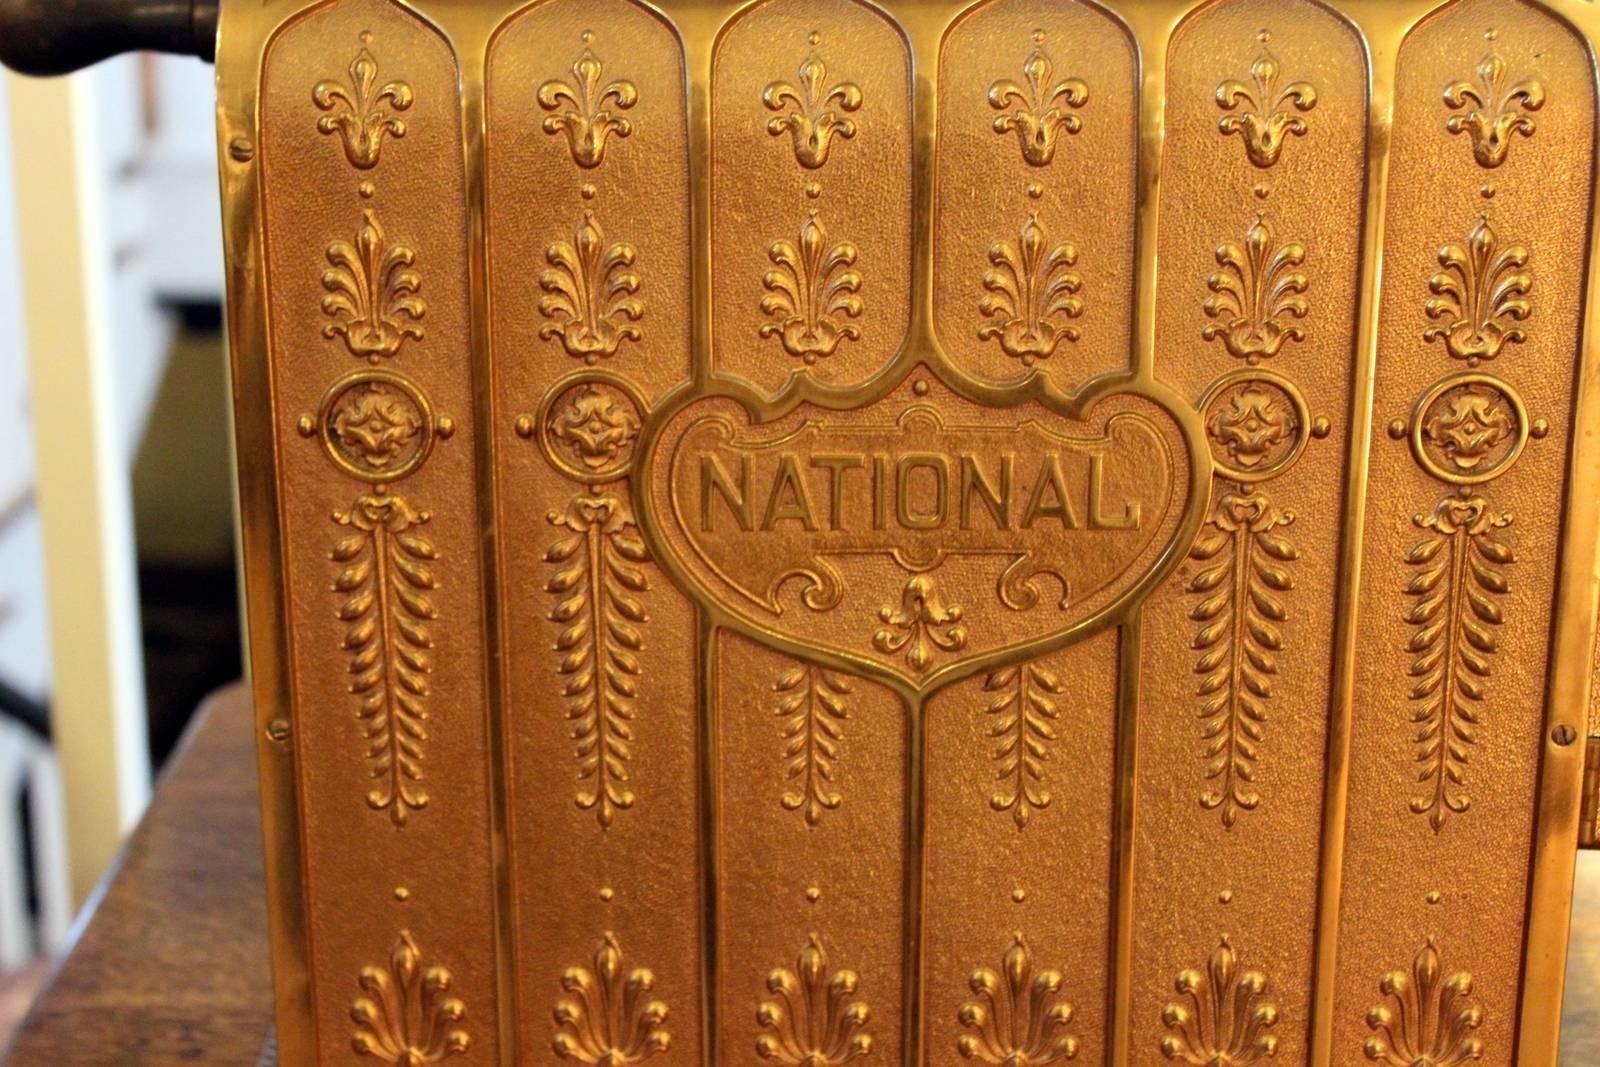 Antique Brass Cash Register by National Cash Register Company, 1910-1915 1